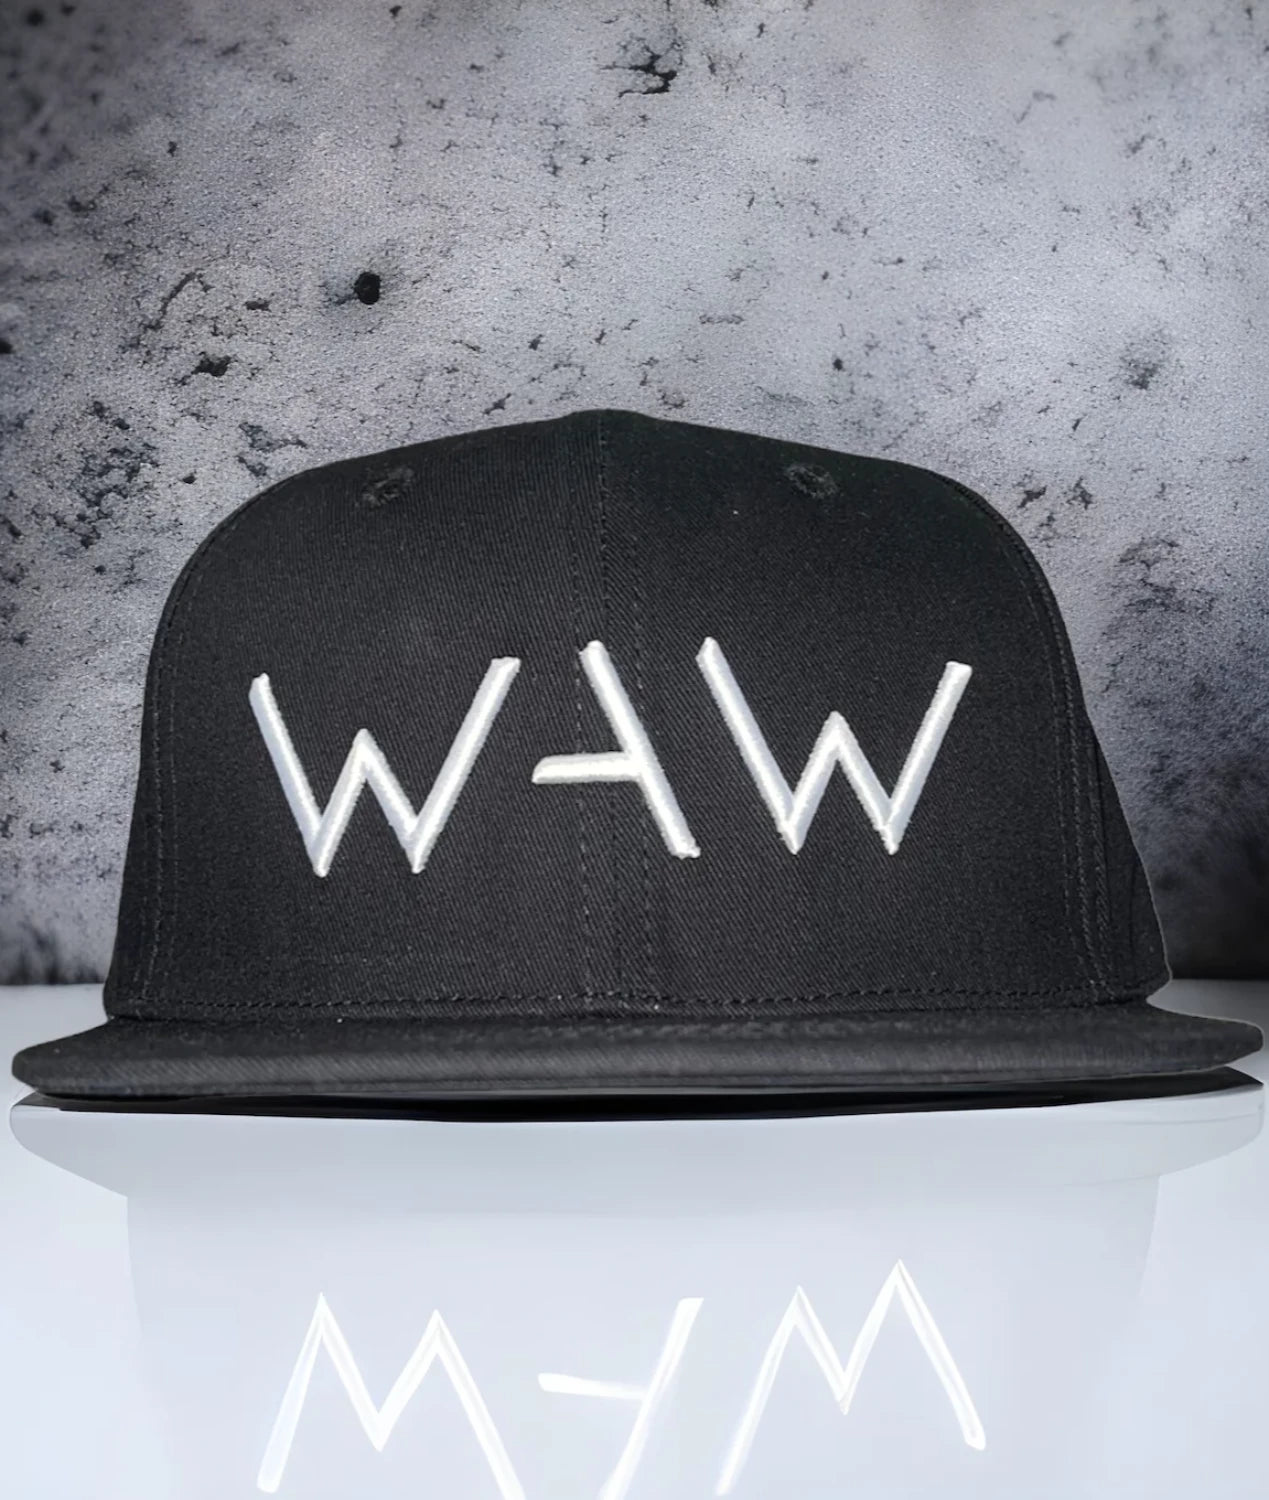 Black cap with WAW logo and Overcome message, WeAreWarriorsApparel.com